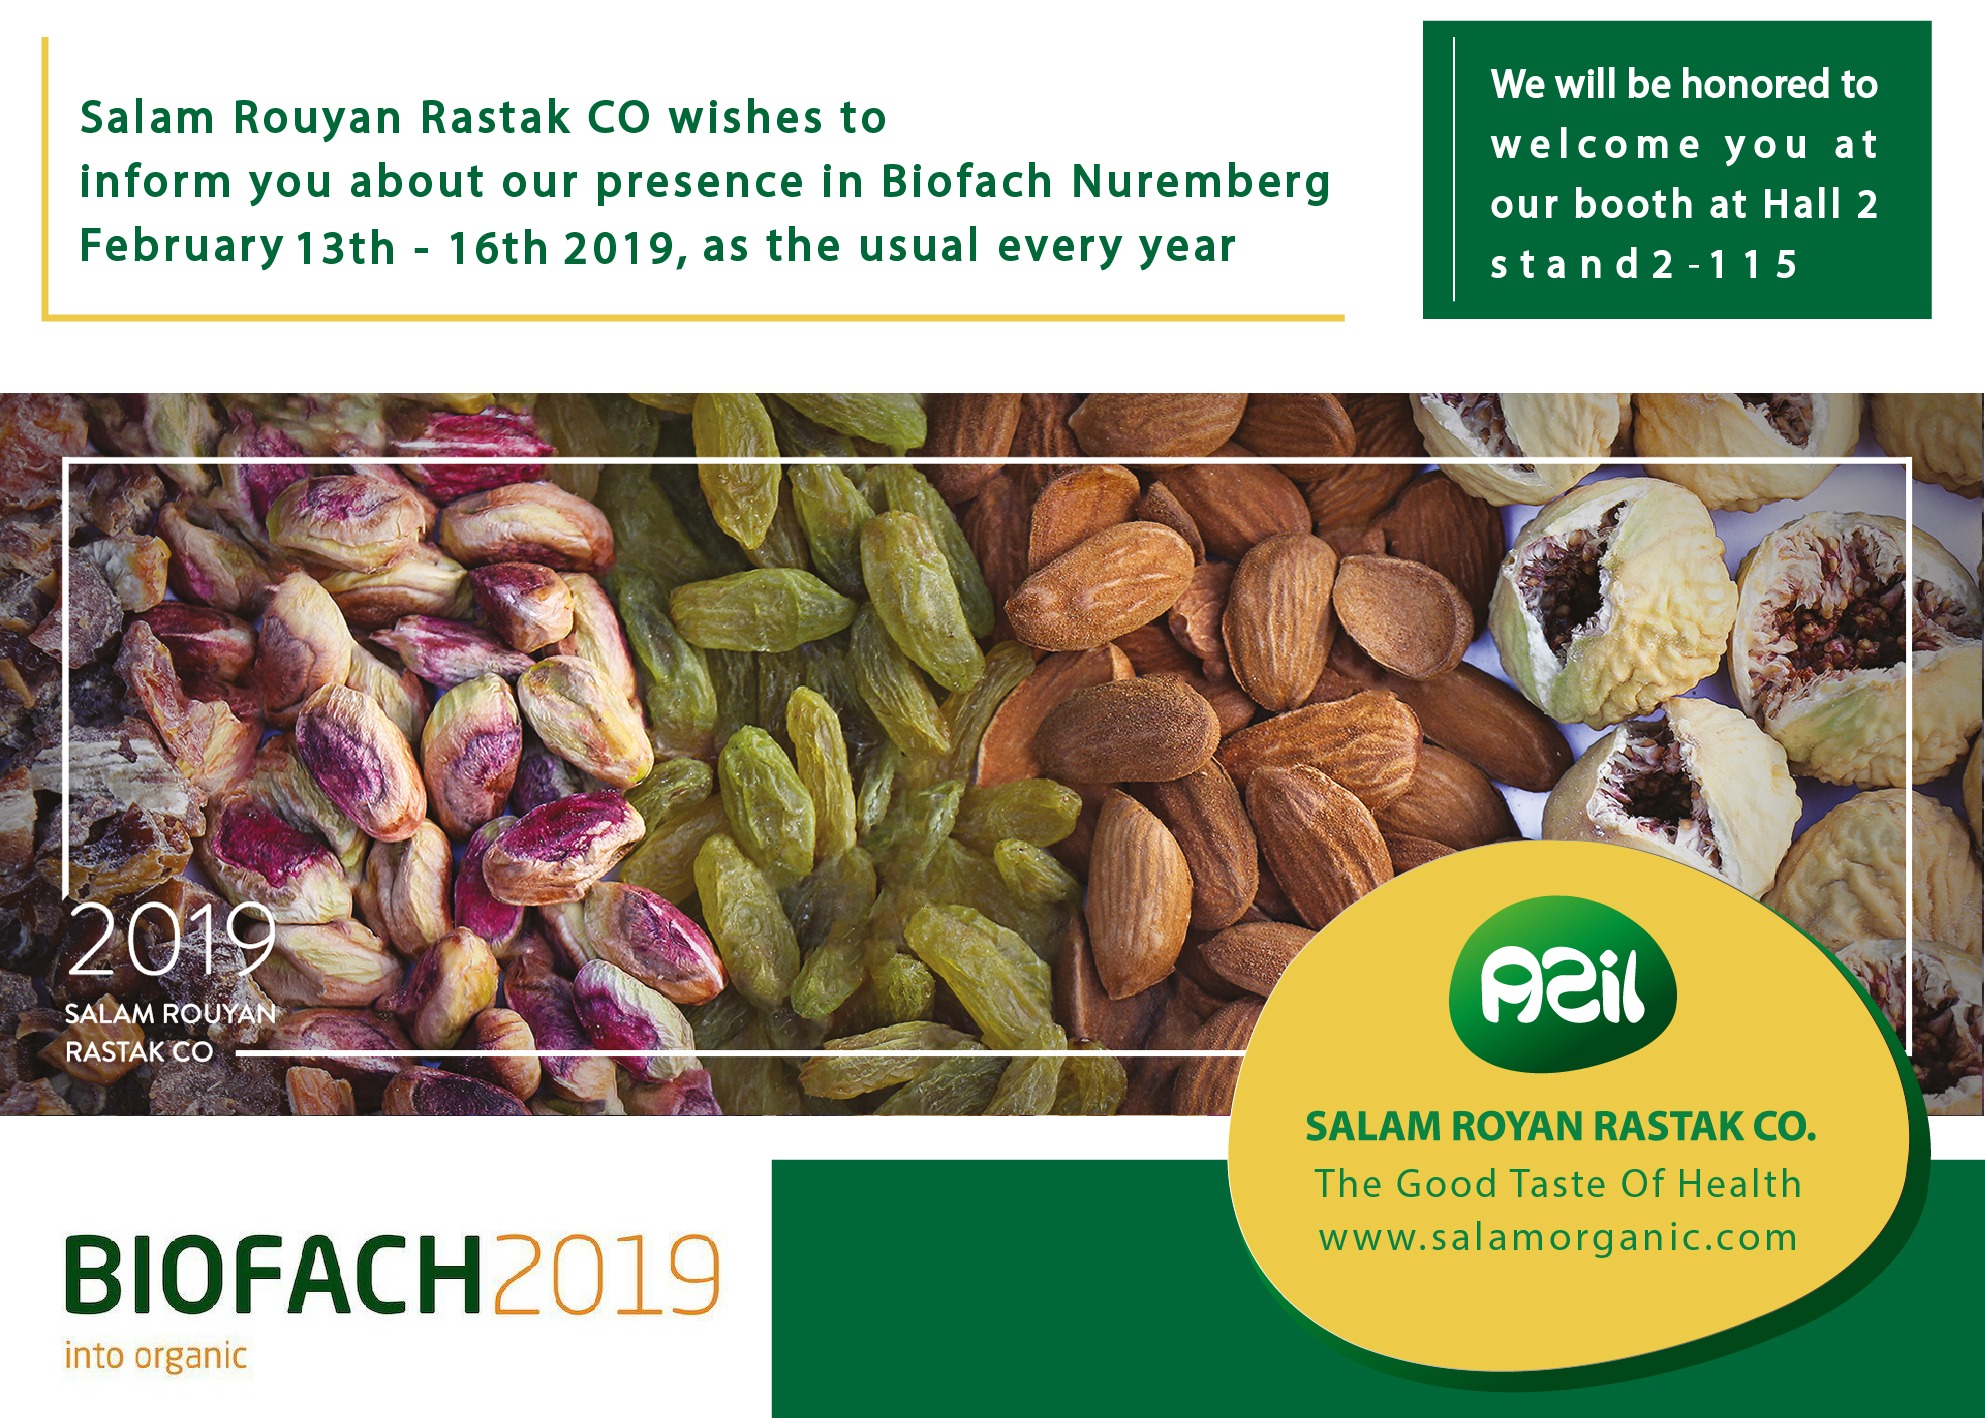 Biofach invitation - Salam Rouyan Rastak CO. presence in Biofach 2019 - Nuremberg